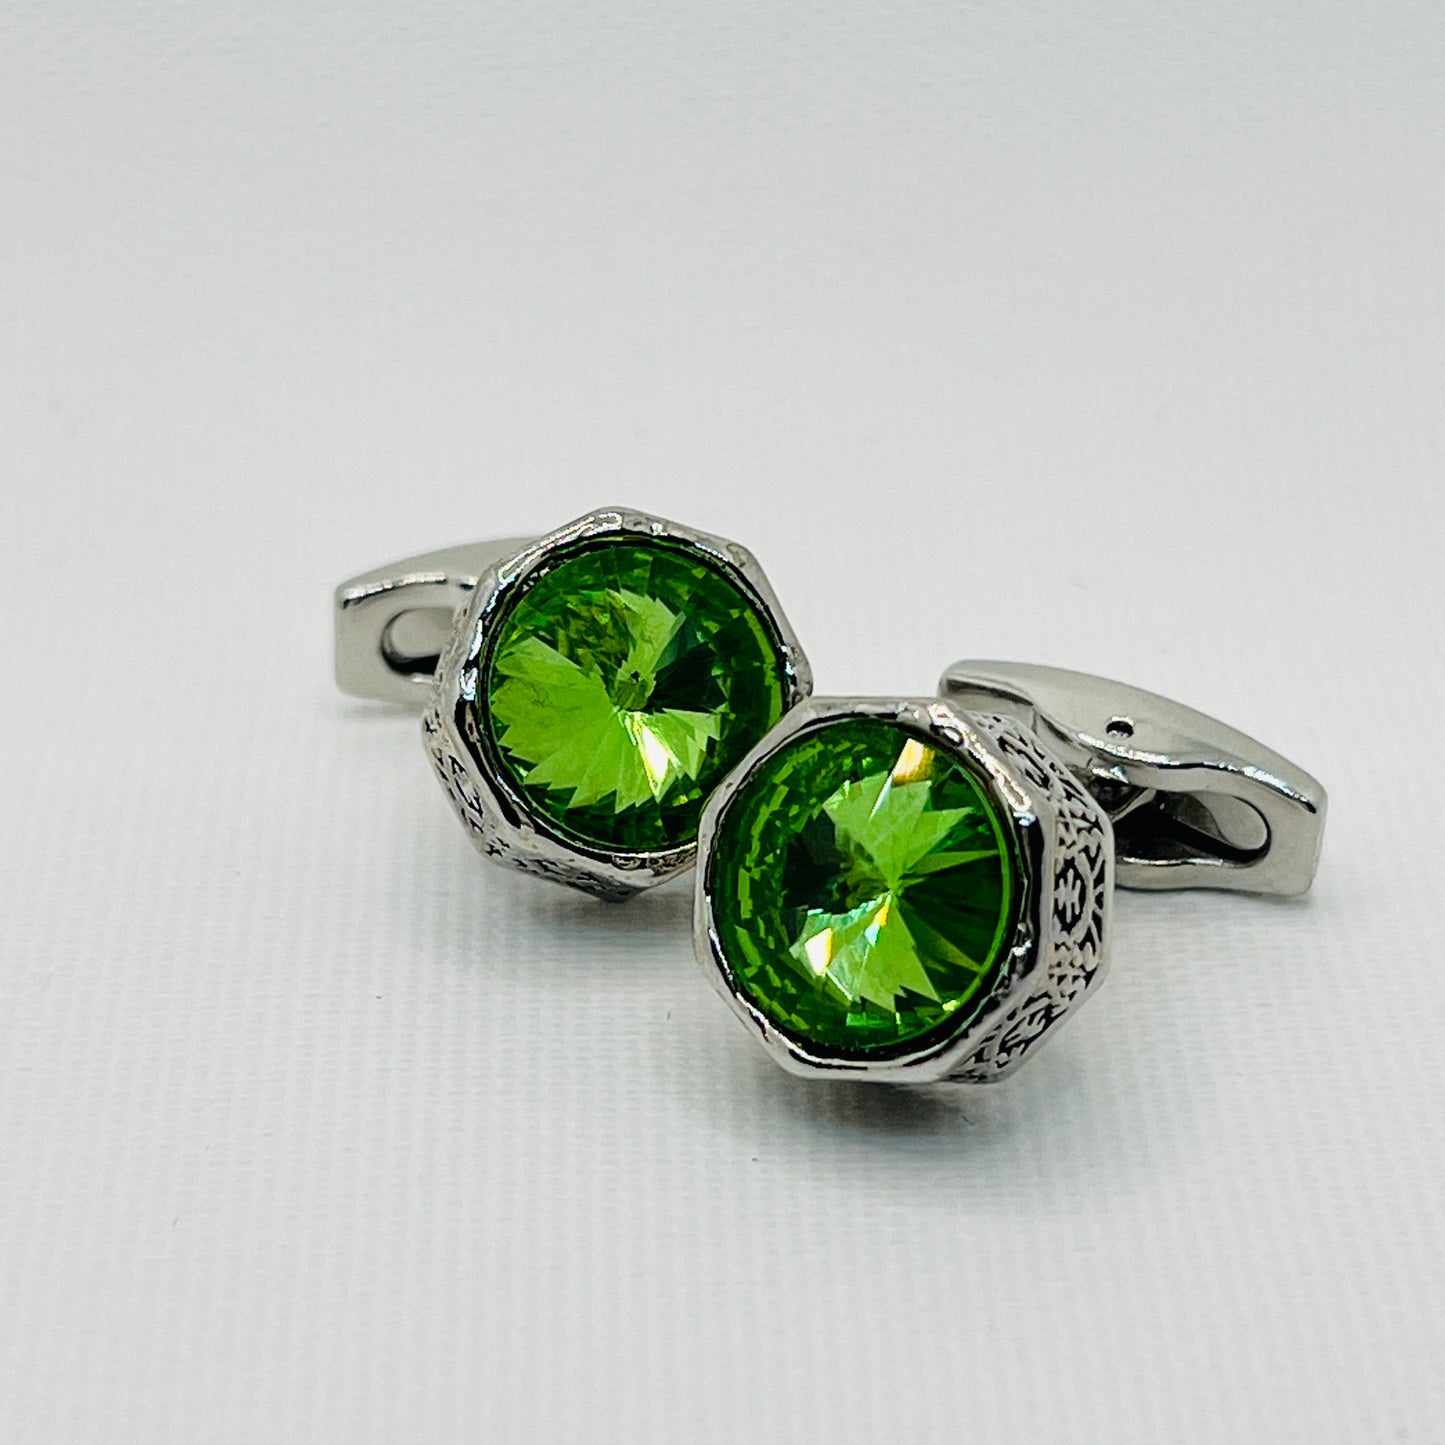 Tasker & Shaw | Luxury Menswear | Green crystal in Octagonal setting cufflinks